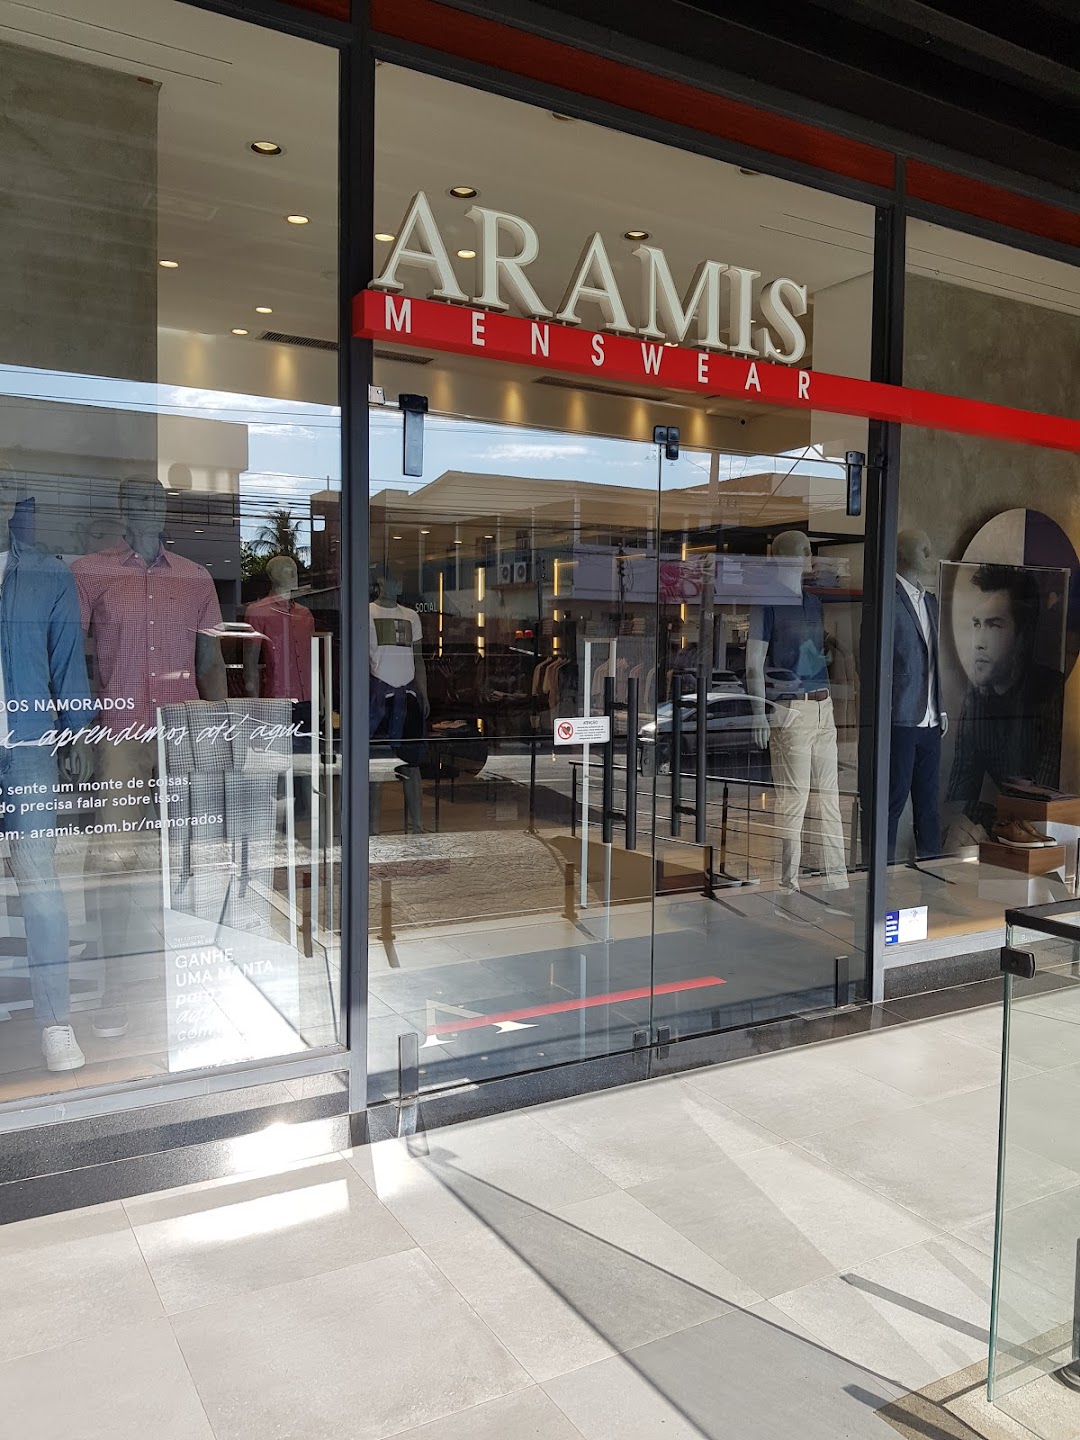 Aramis Menswear